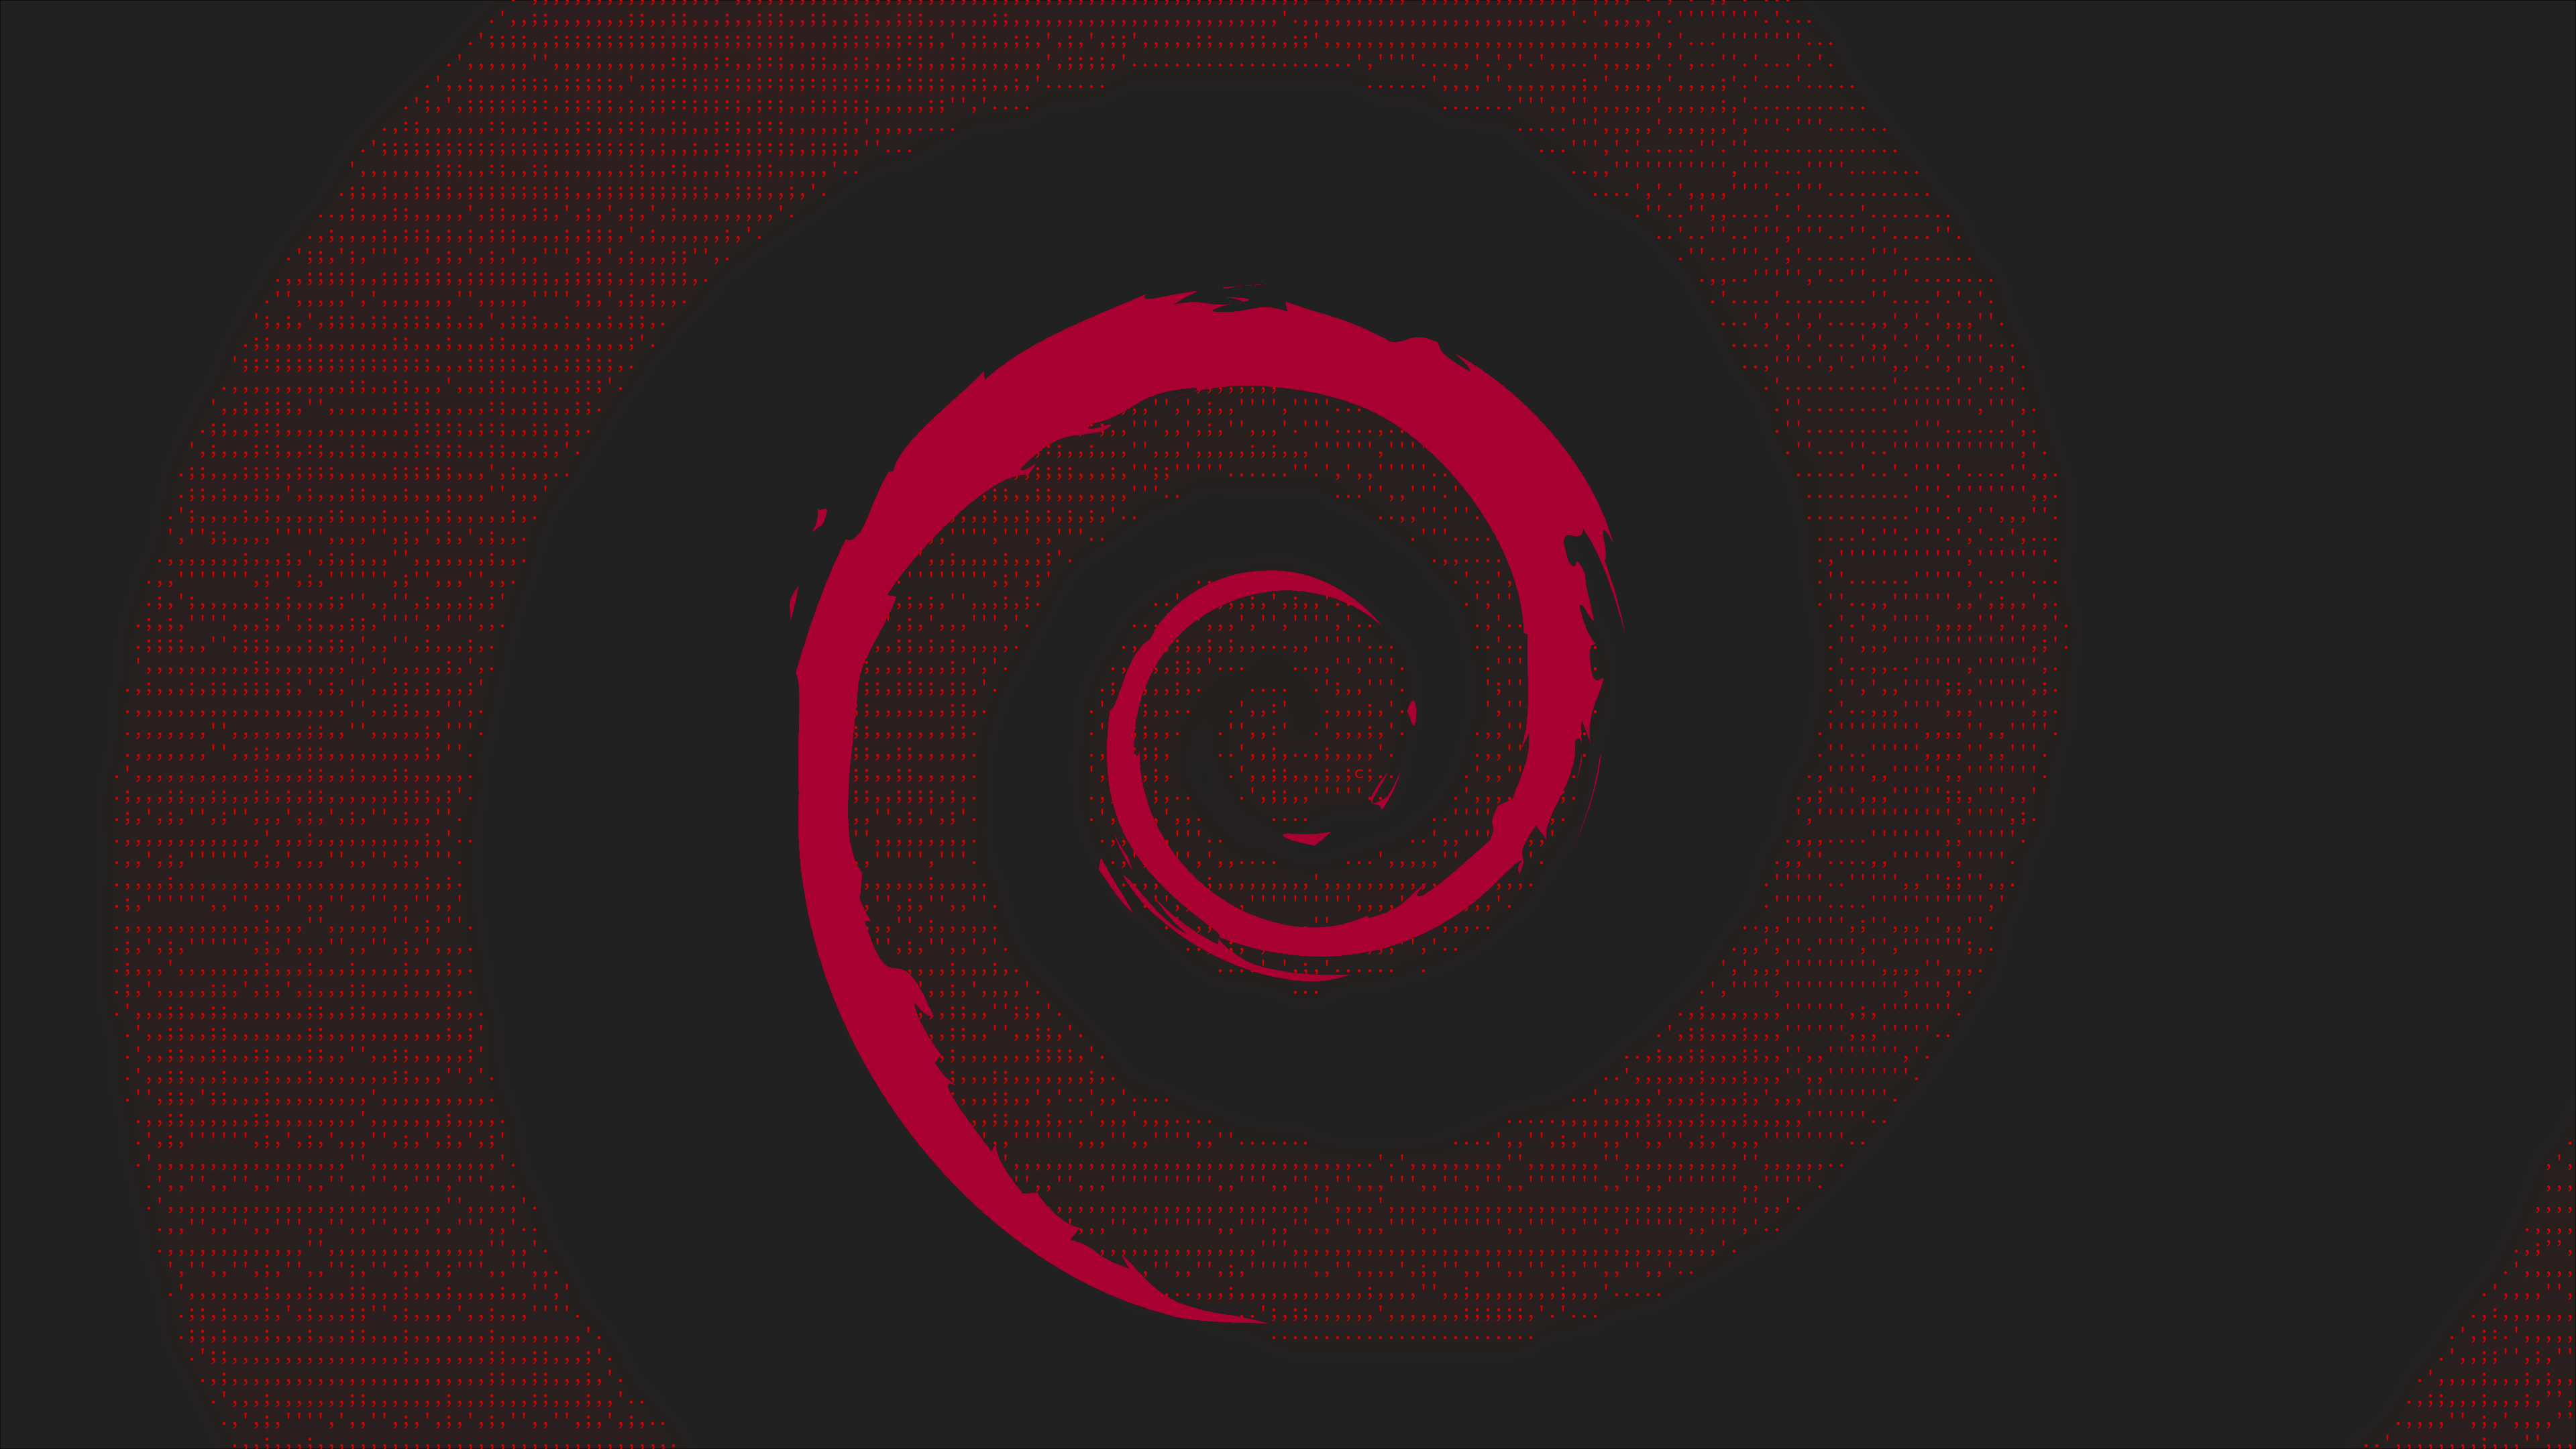 General 3840x2160 Debian Linux minimalism material minimal ASCII art text material style red operating system digital art